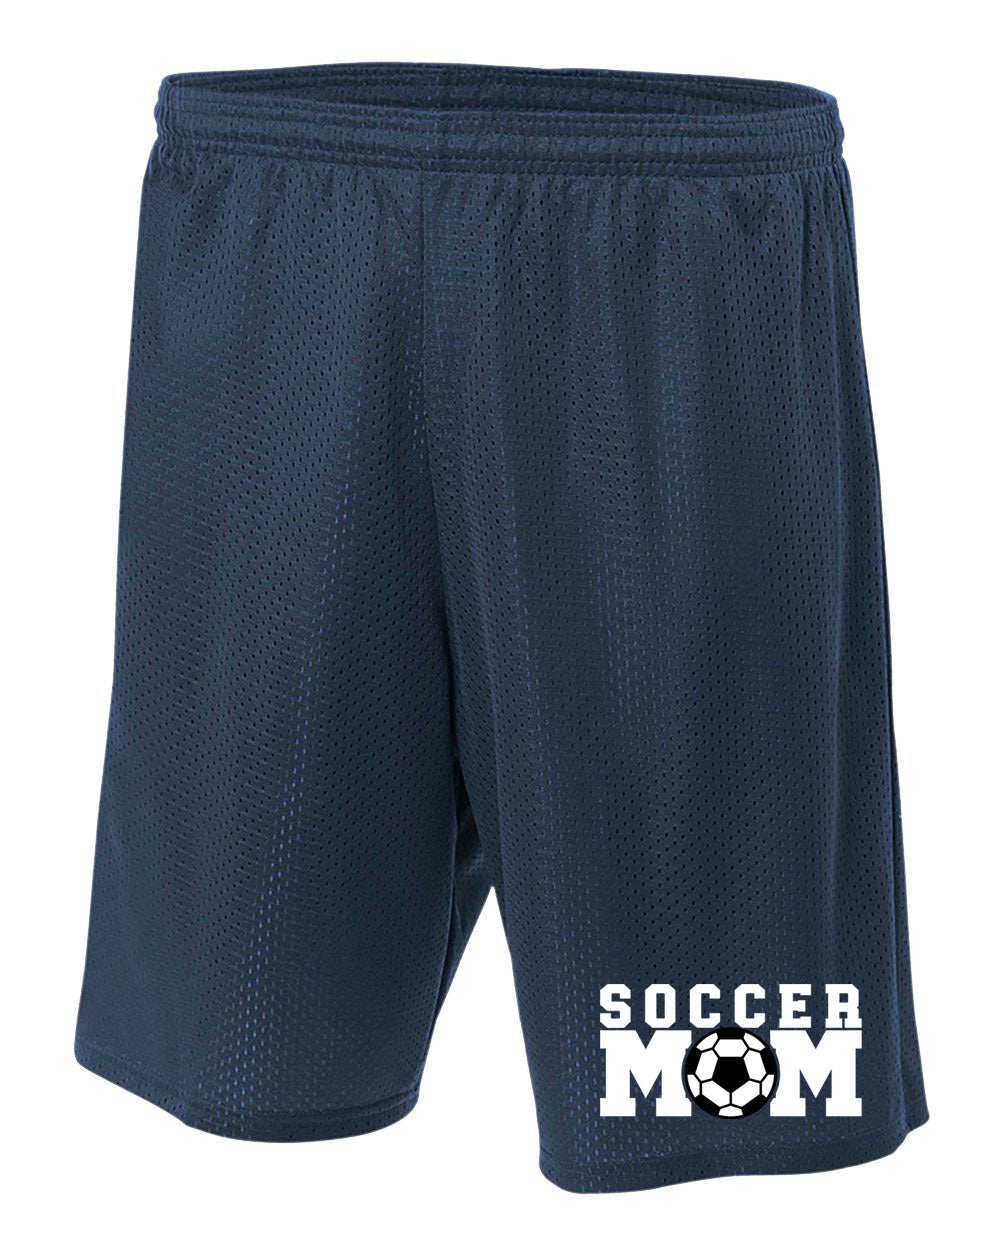 Sandyston Soccer Design 4 Mesh Shorts